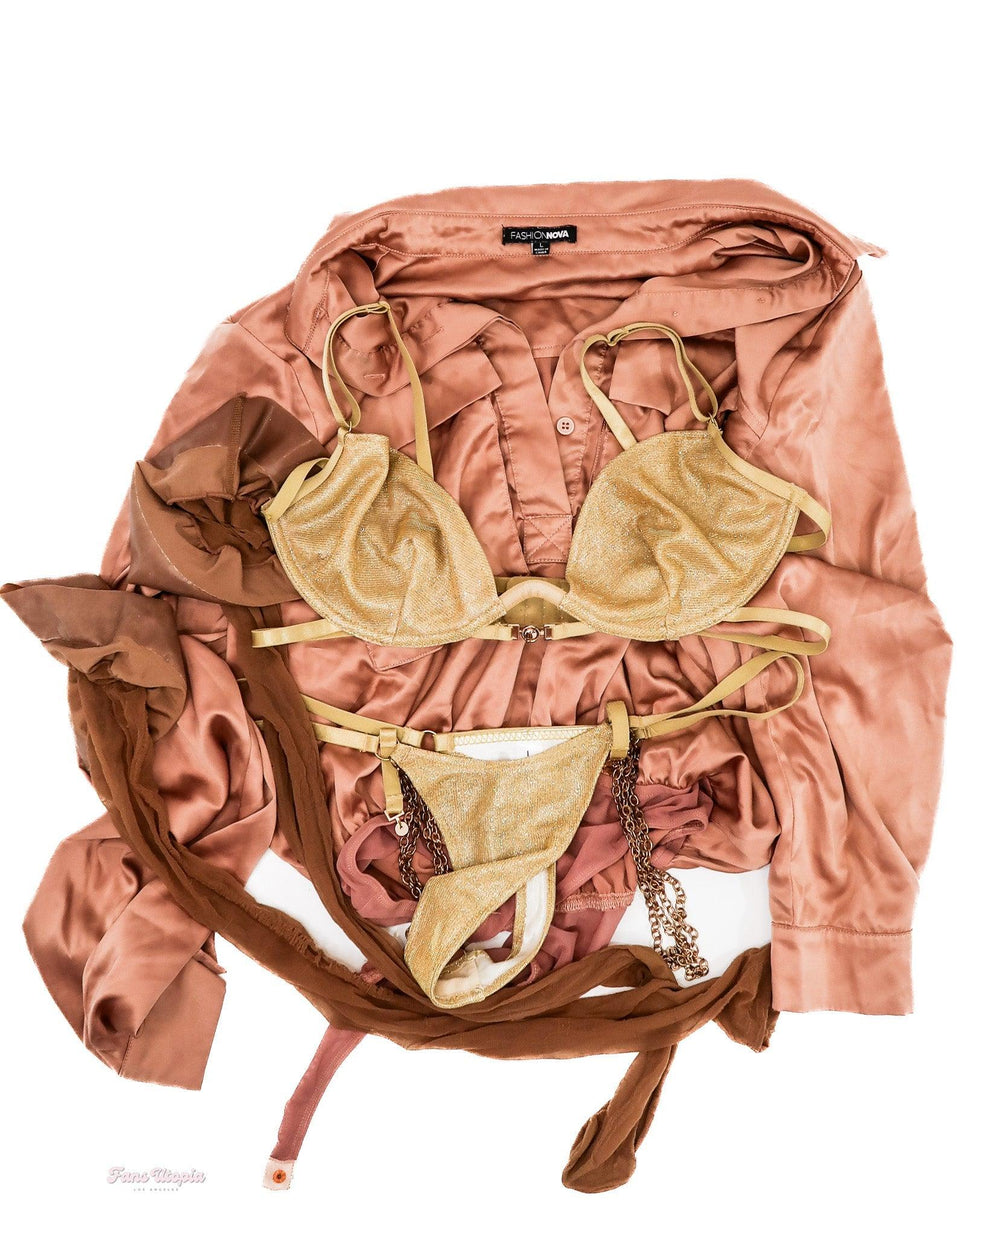 Rachael Cavalli Gold Bra & Panties + Bodysuit - FANS UTOPIA